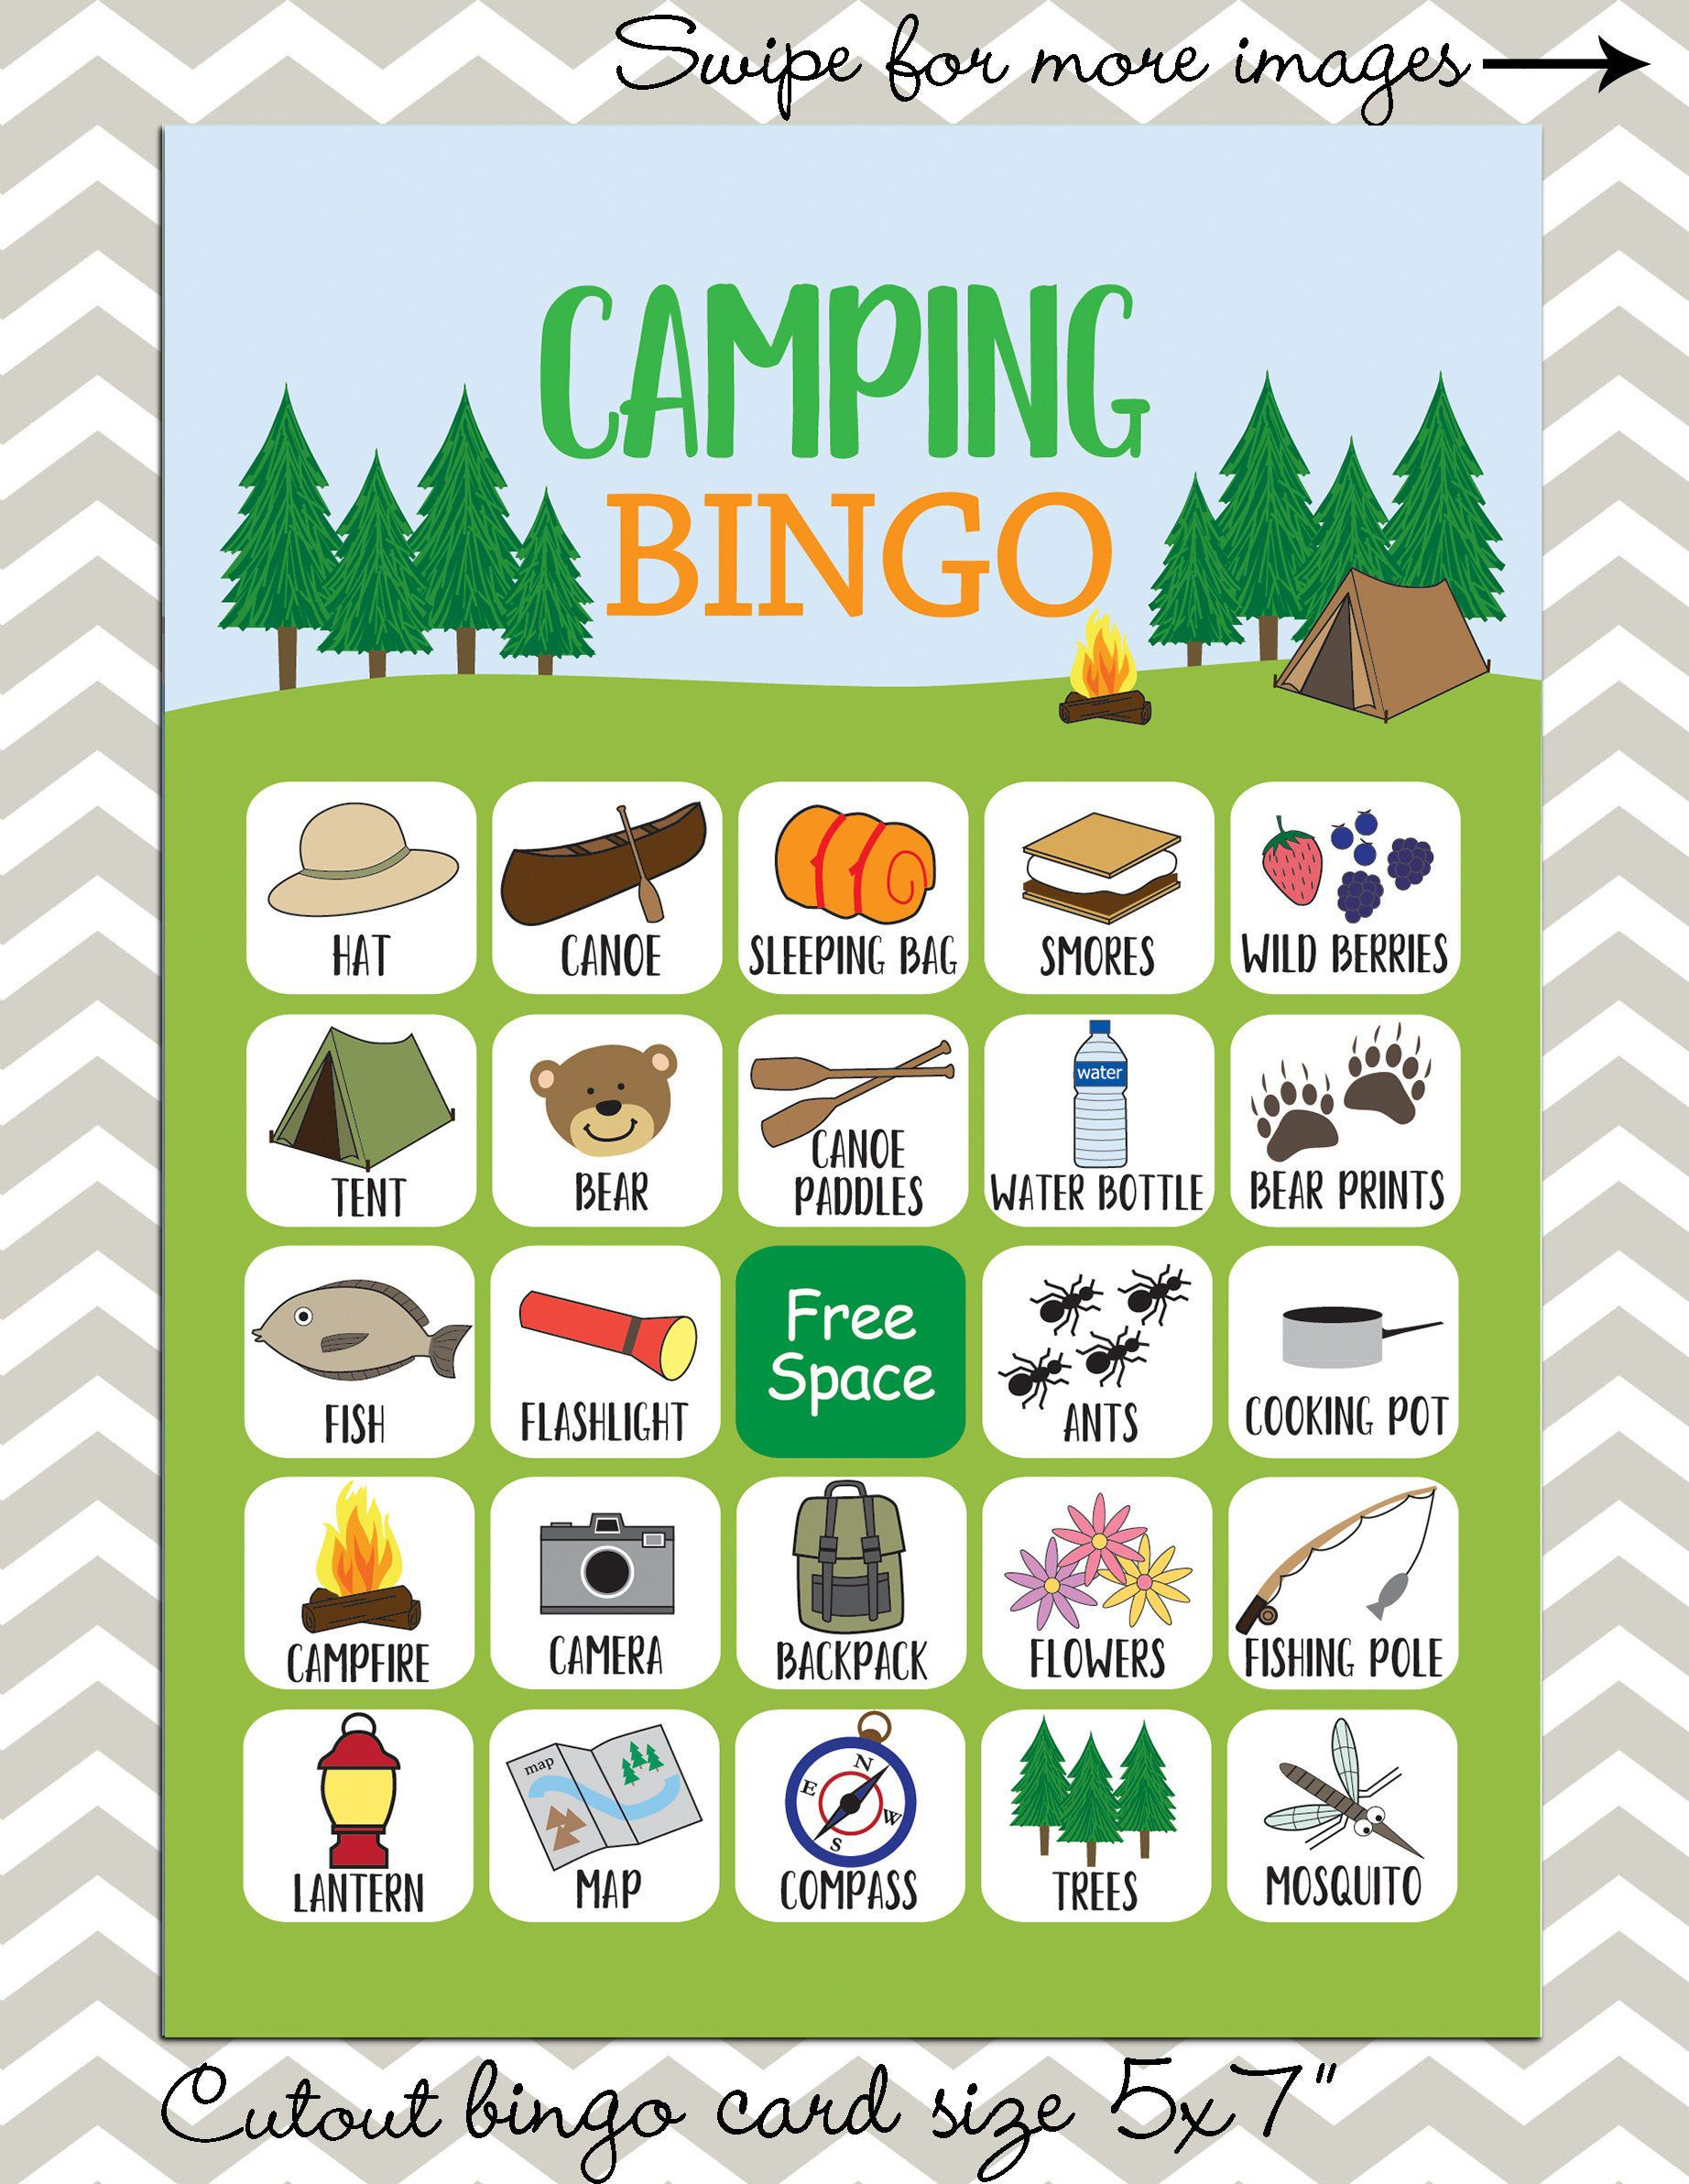 20 Camping Bingo Cards 20 Unique Prefilled Game Cards 